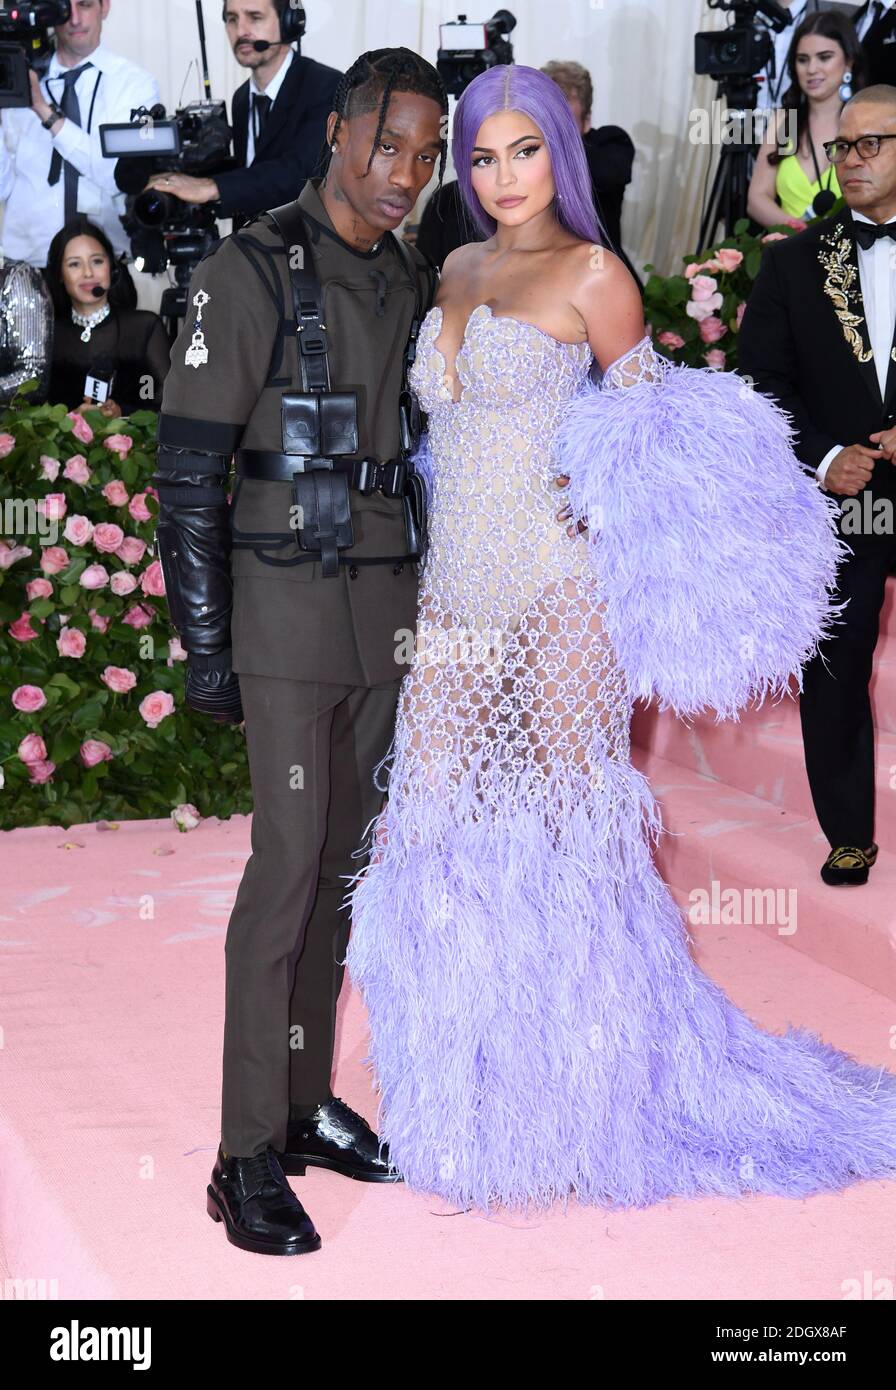 Travis Scott und Kylie Jenner beim Metropolitan Museum of Art Costume Institute Benefit Gala 2019 in New York, USA.Bildnachweis sollte lesen: Doug Peters/EMPICS Stockfoto